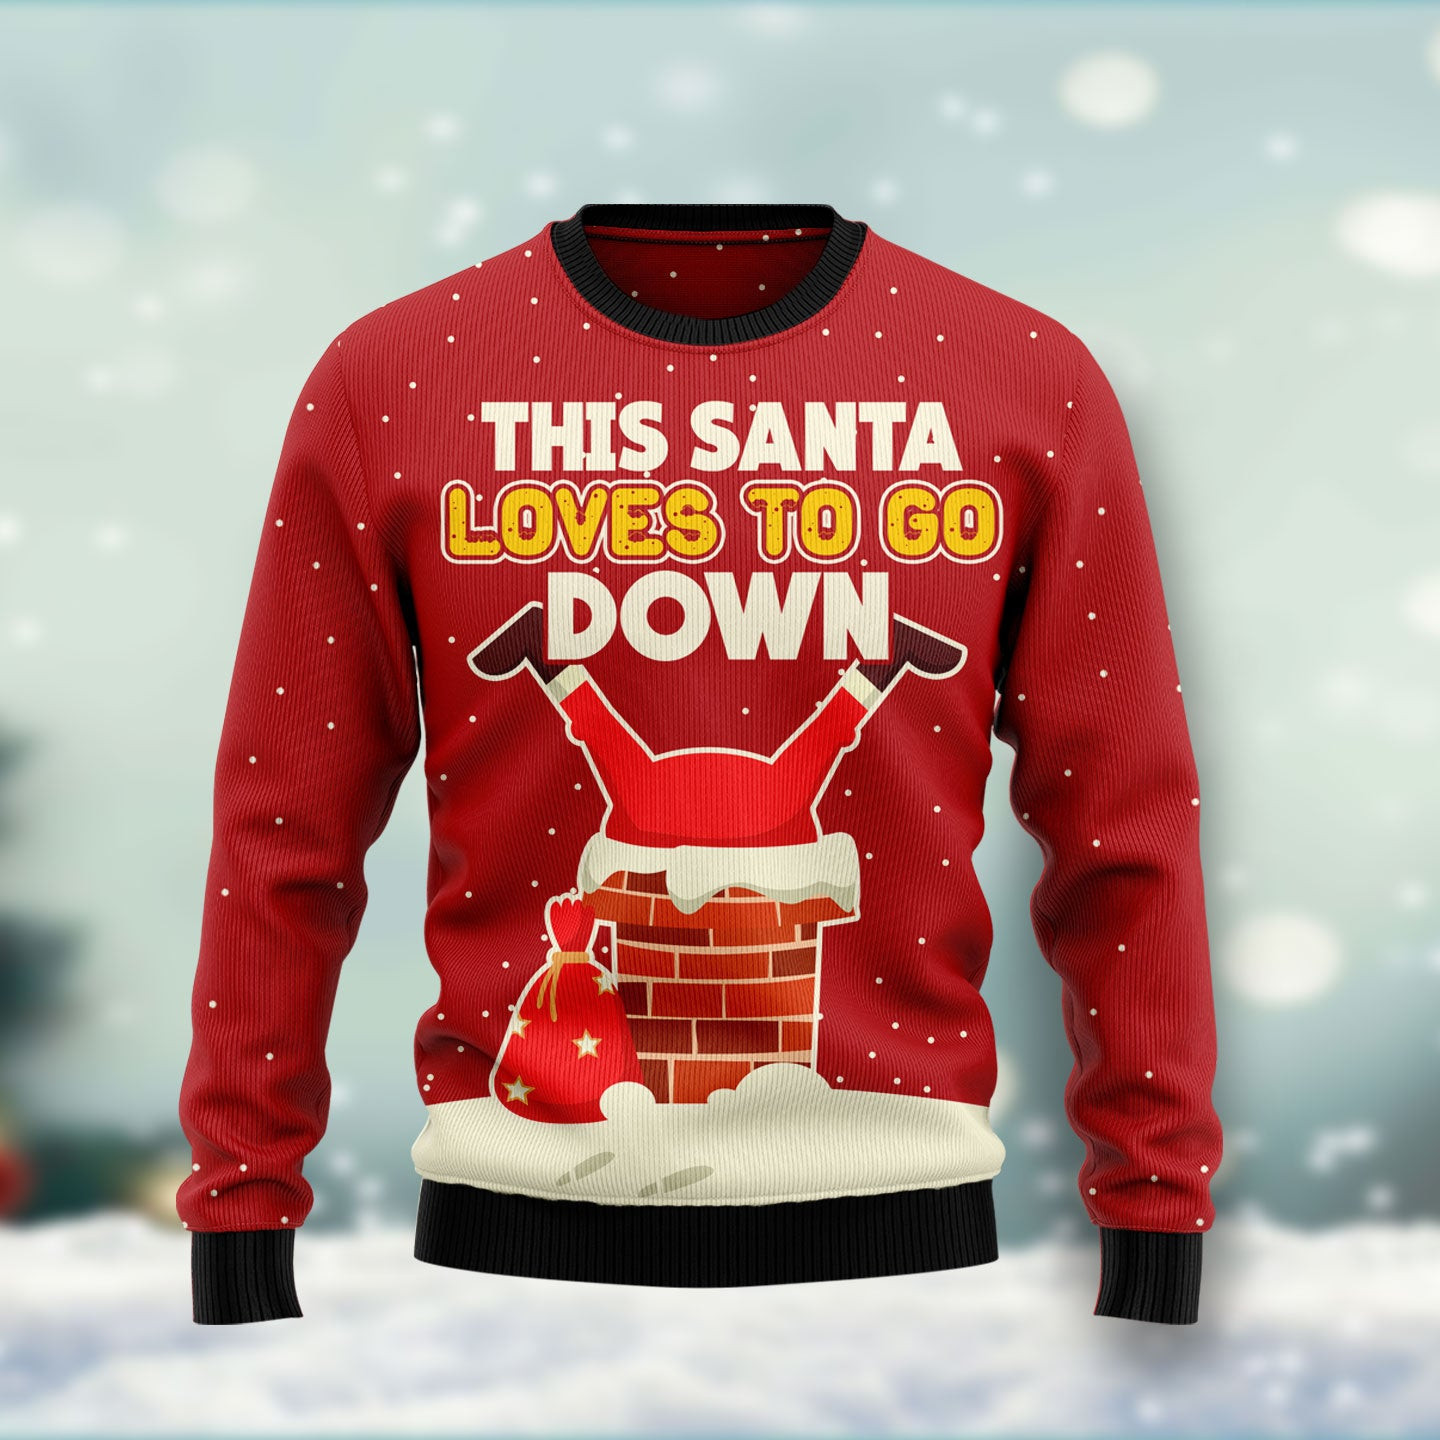 Satan Claus Ugly Christmas Sweater